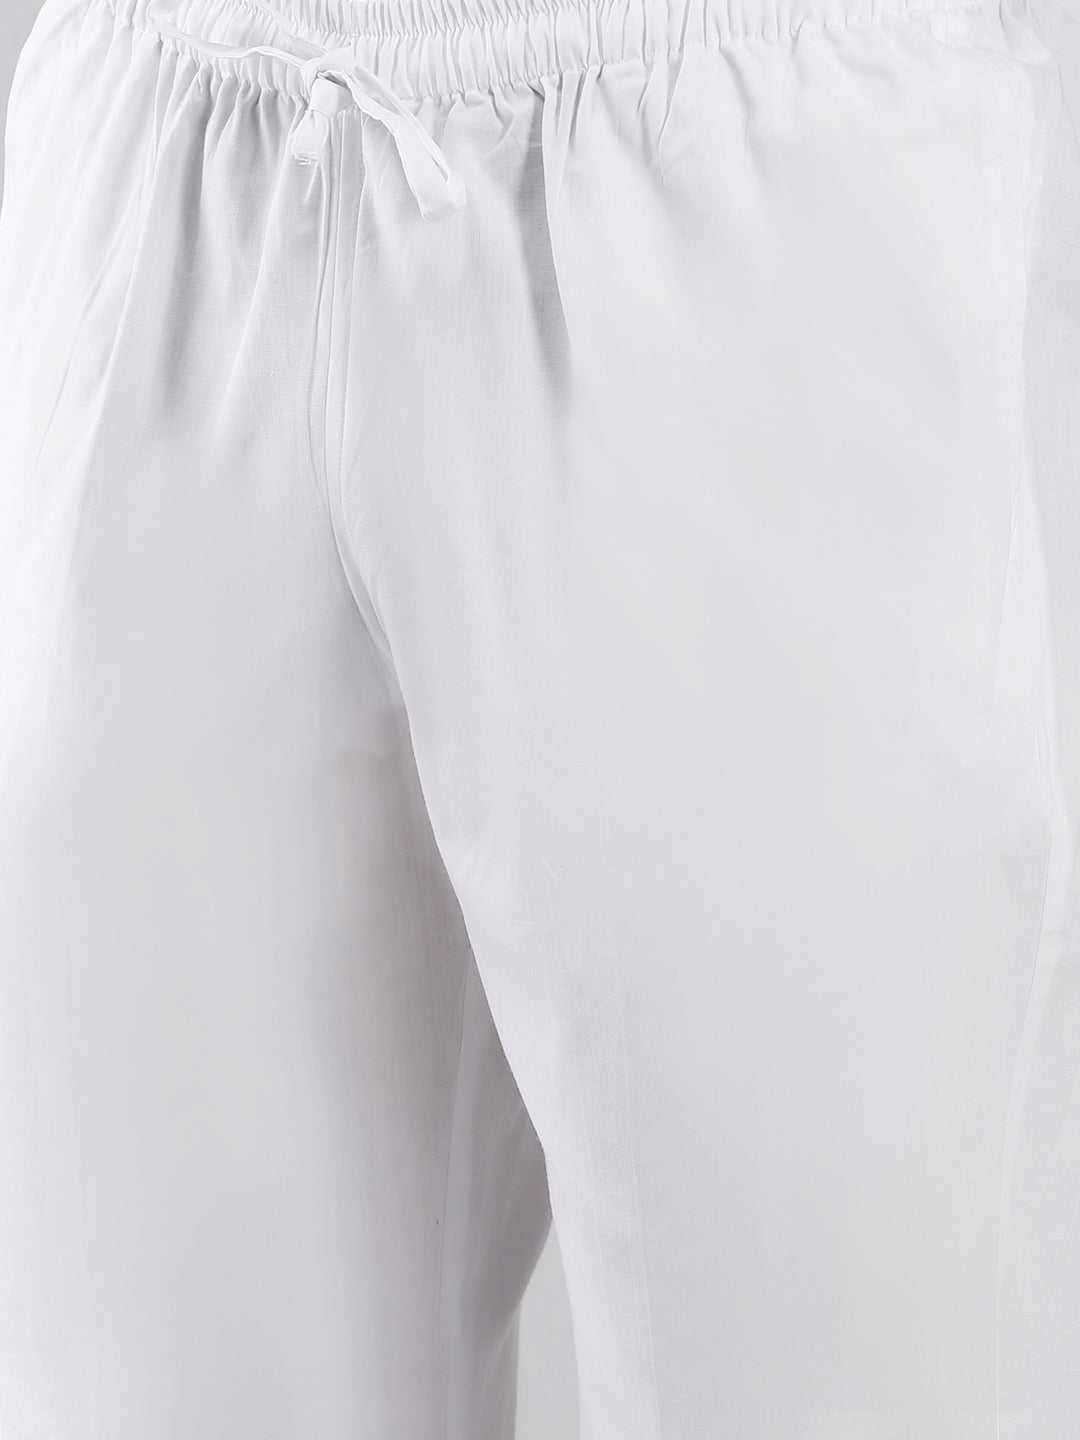 Men Peach-Coloured & White Printed Pure Cotton Straight Kurta With Pyjama